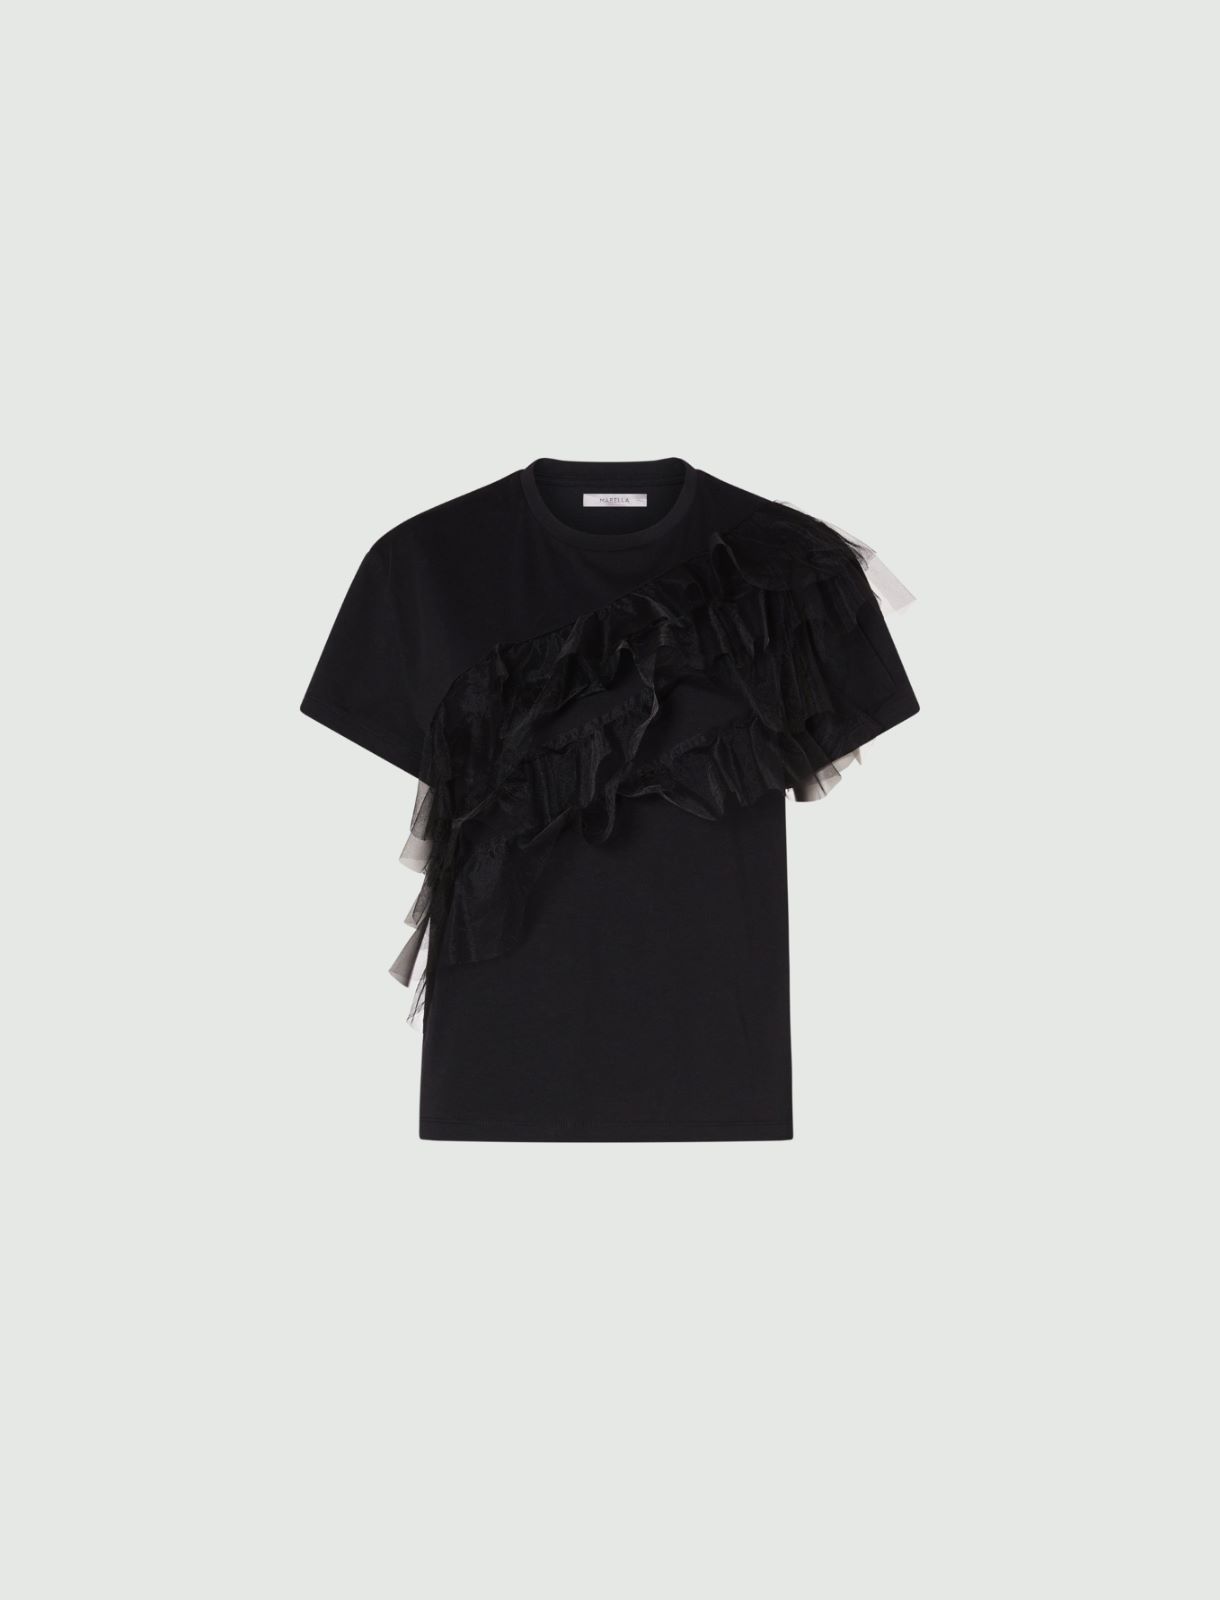 Ruffle T-shirt - Black - Marina Rinaldi - 5